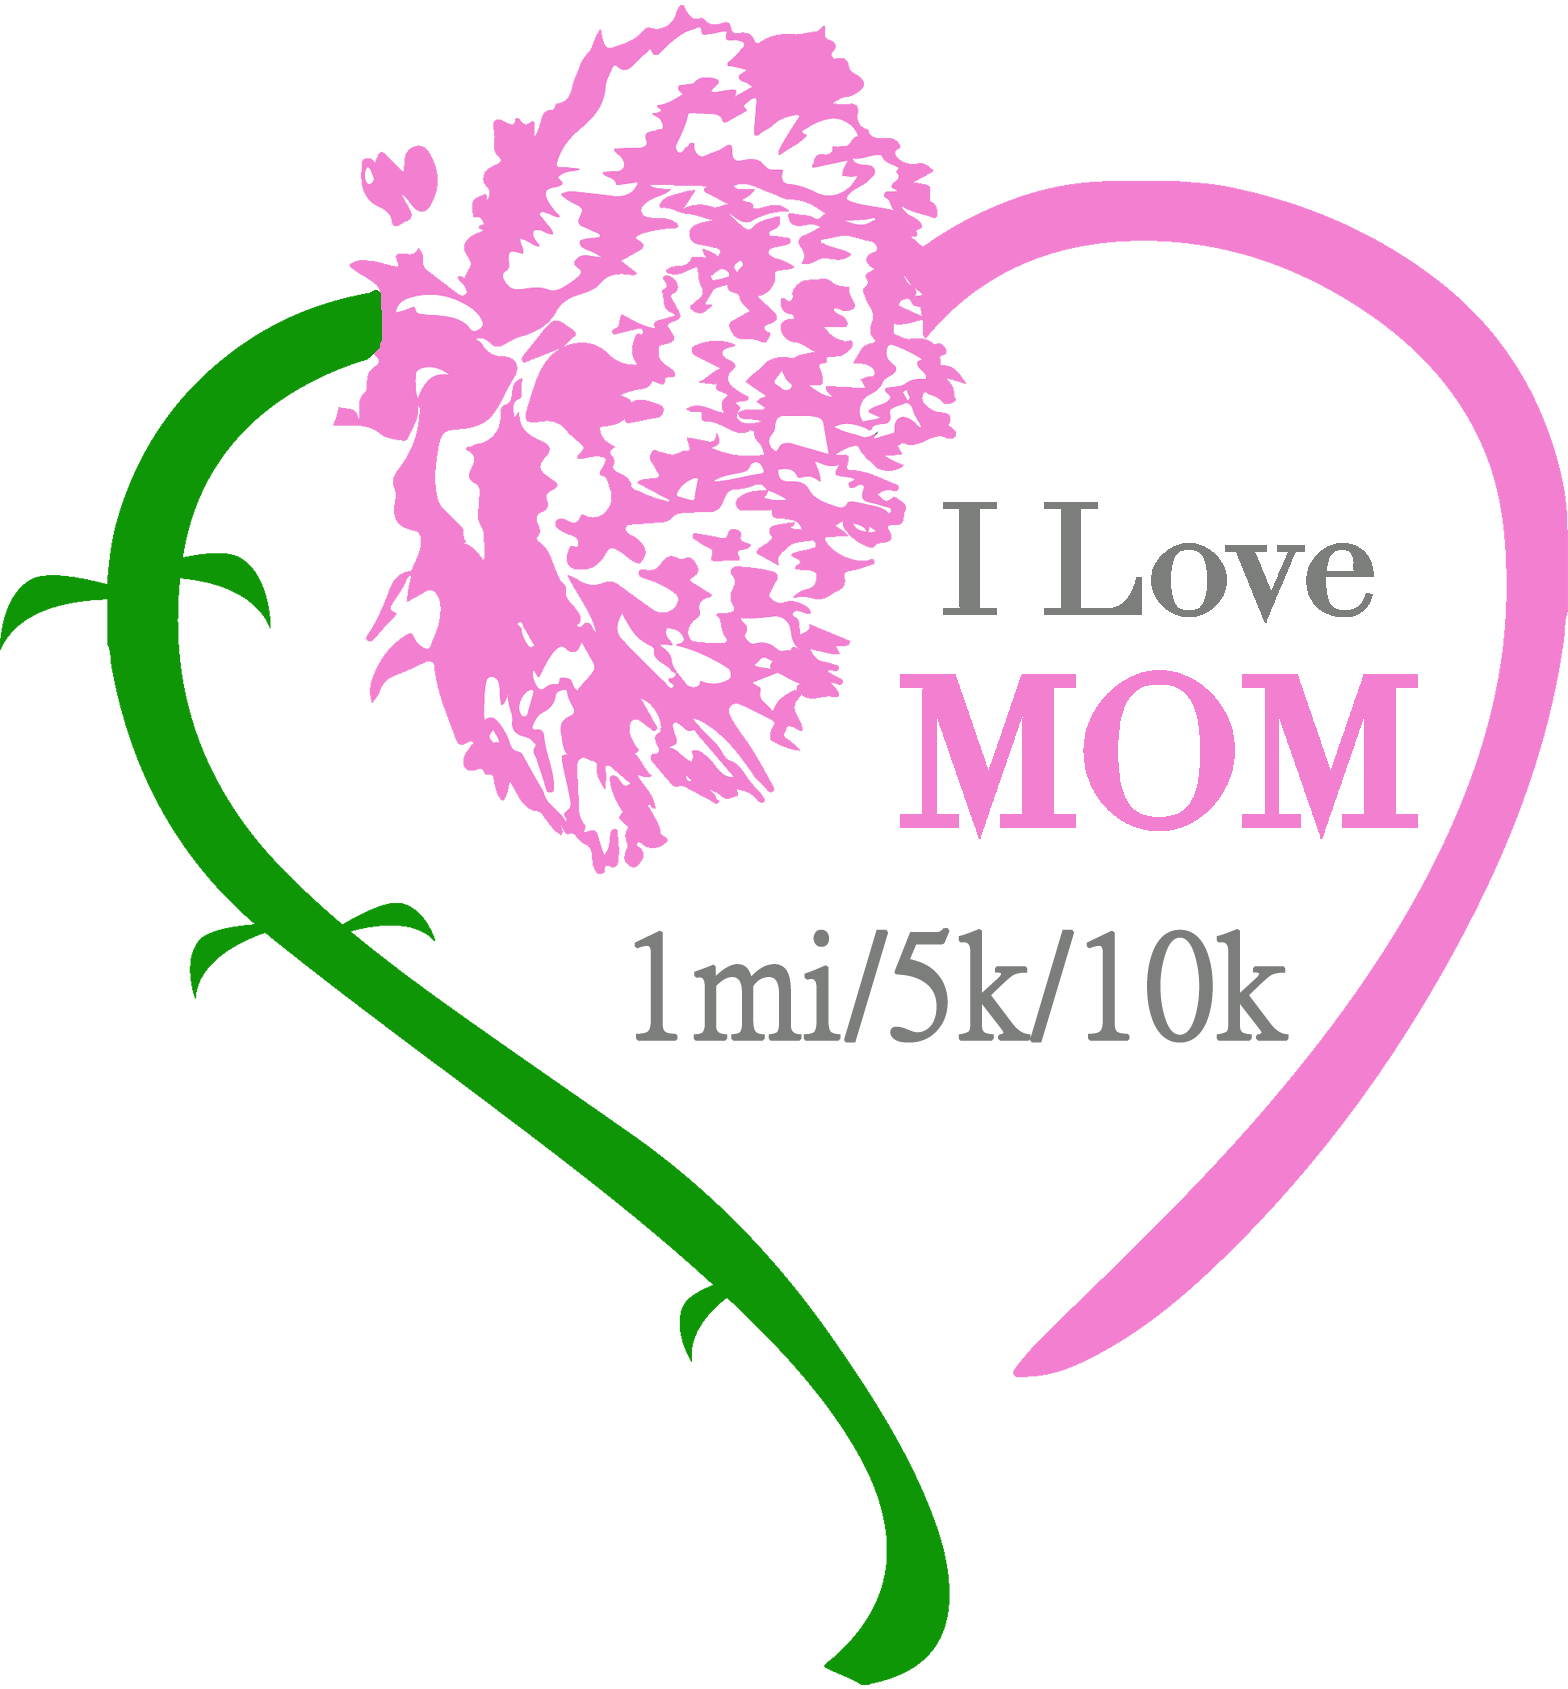 Ohio Mother's Day 1mi, 5k, 10k and FREE Kids Run: I Love MOM! - Columbus, Ohio